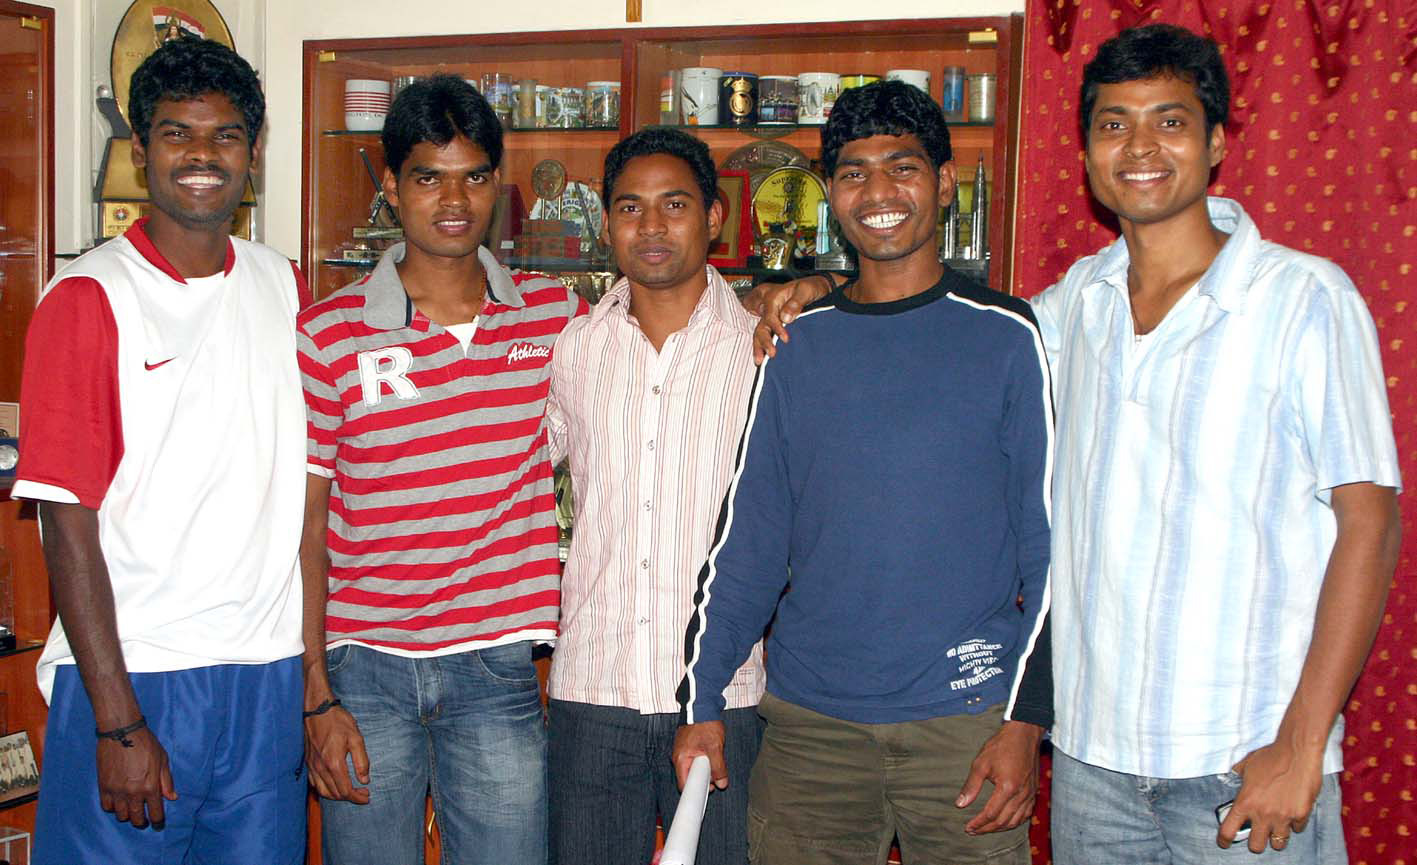 Hockey stars of Orissa (Left to right): Ignace Tirkey, Prabodh Tirkey, Roshan Minz, William Xalxo and Dilip Tirkey in Bhubaneswar in 2008.